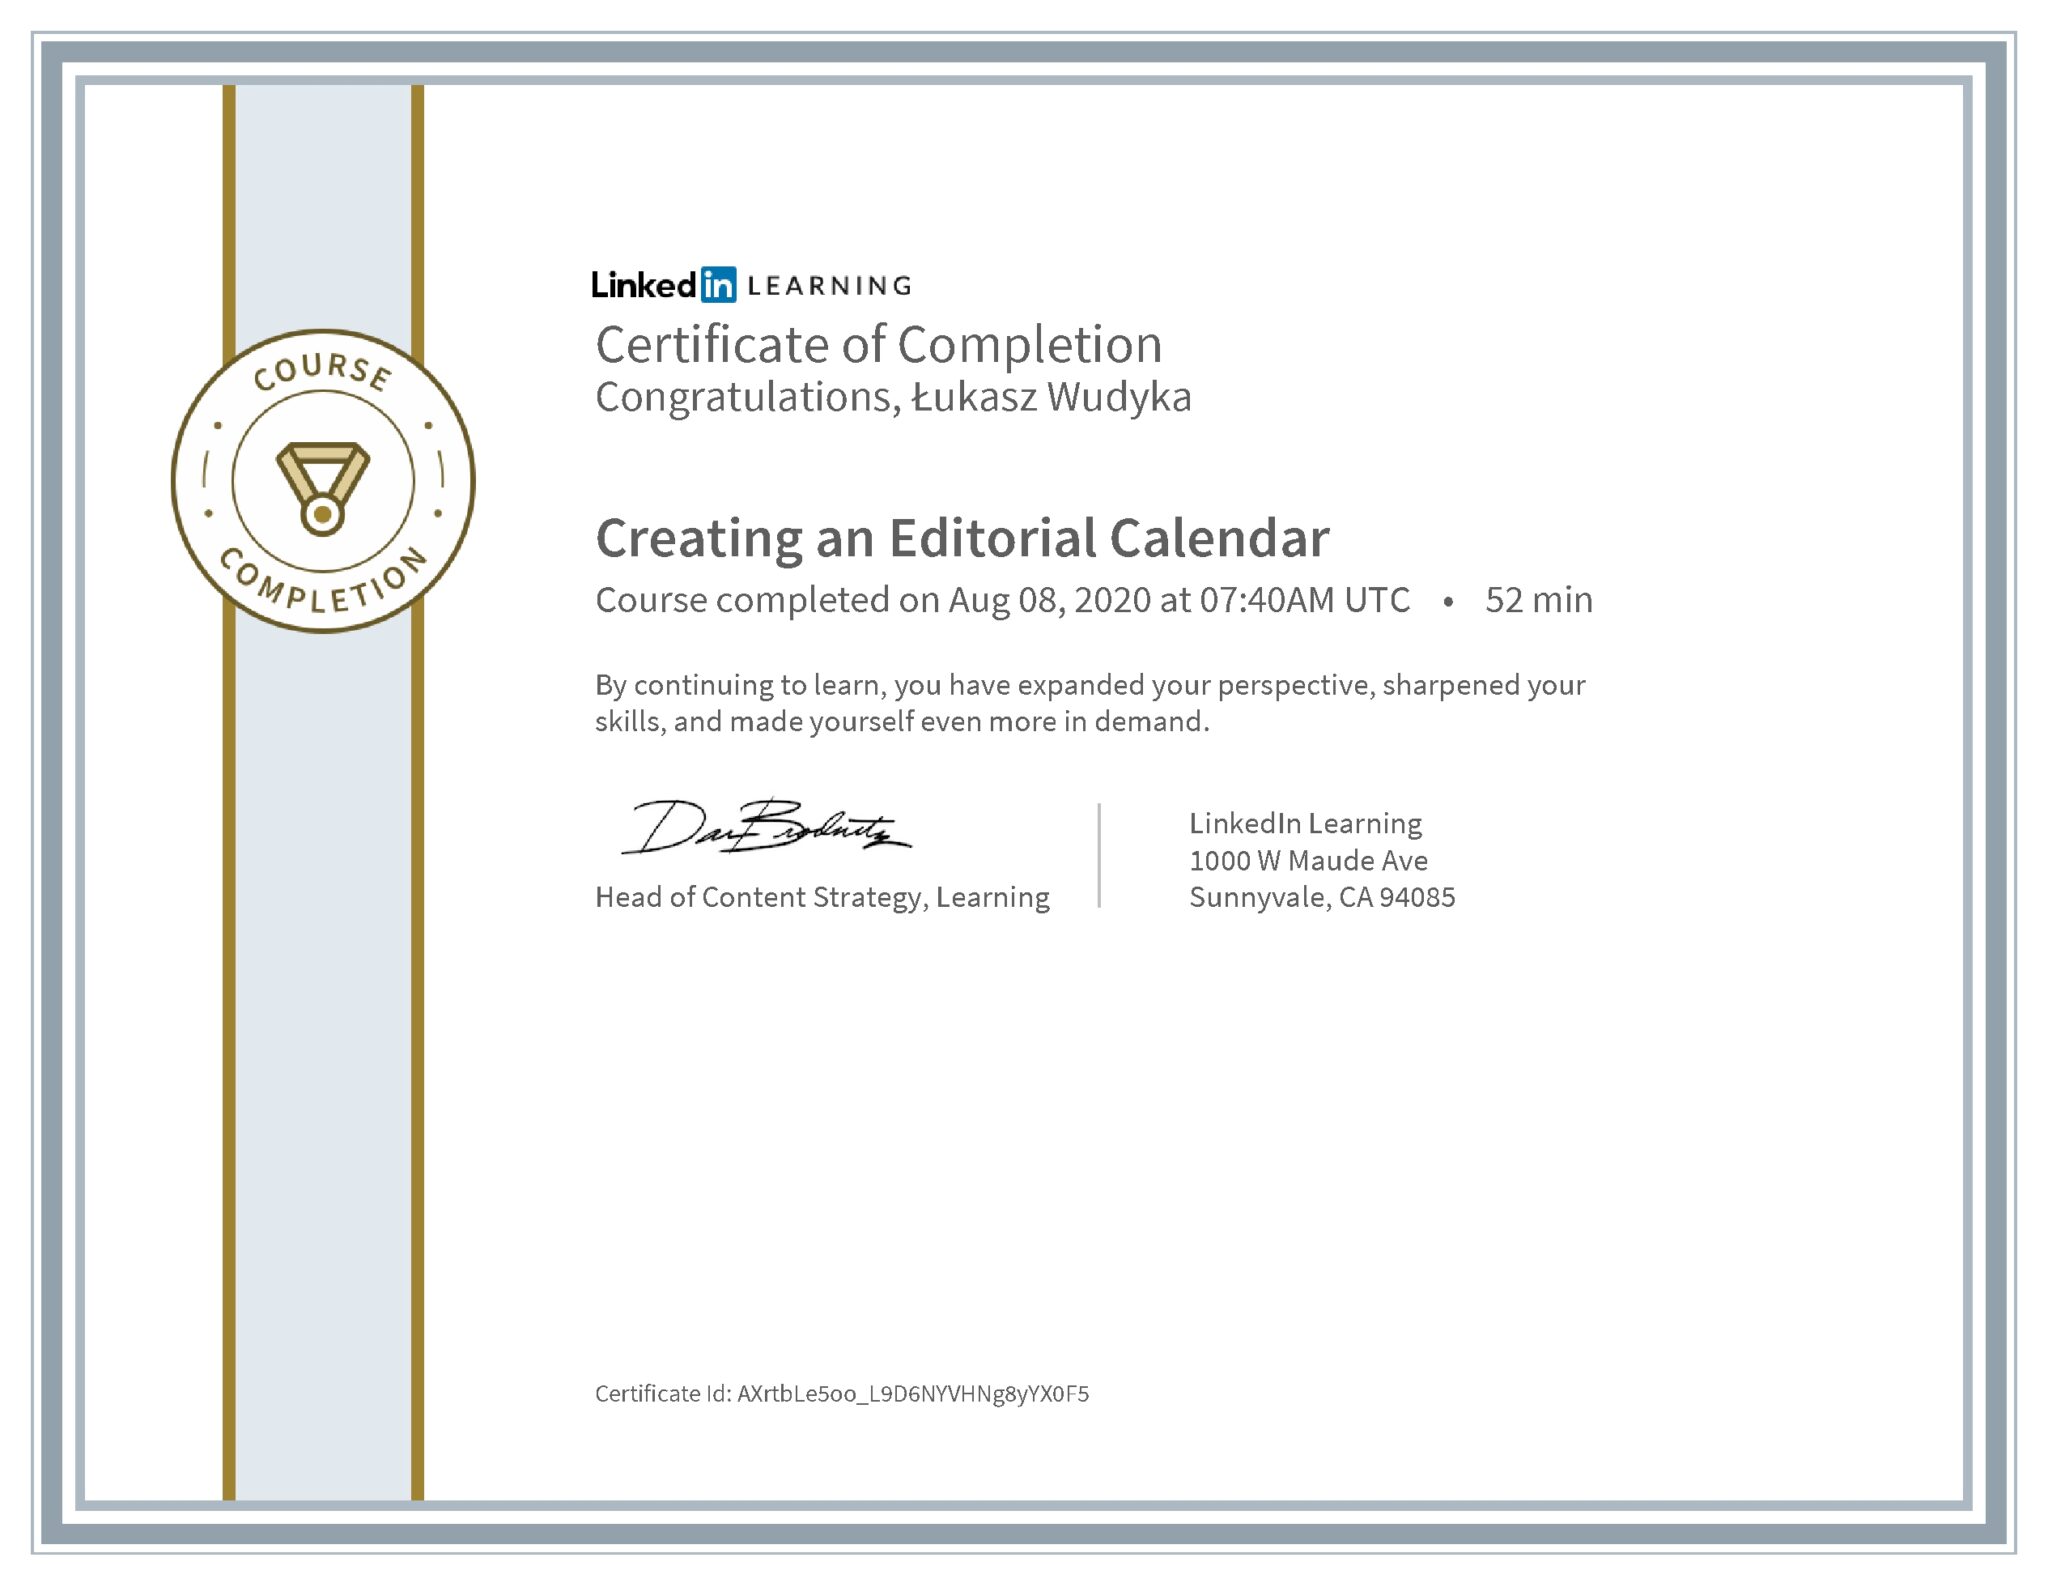 Łukasz Wudyka certyfikat LinkedIn Creating an Editorial Calendar